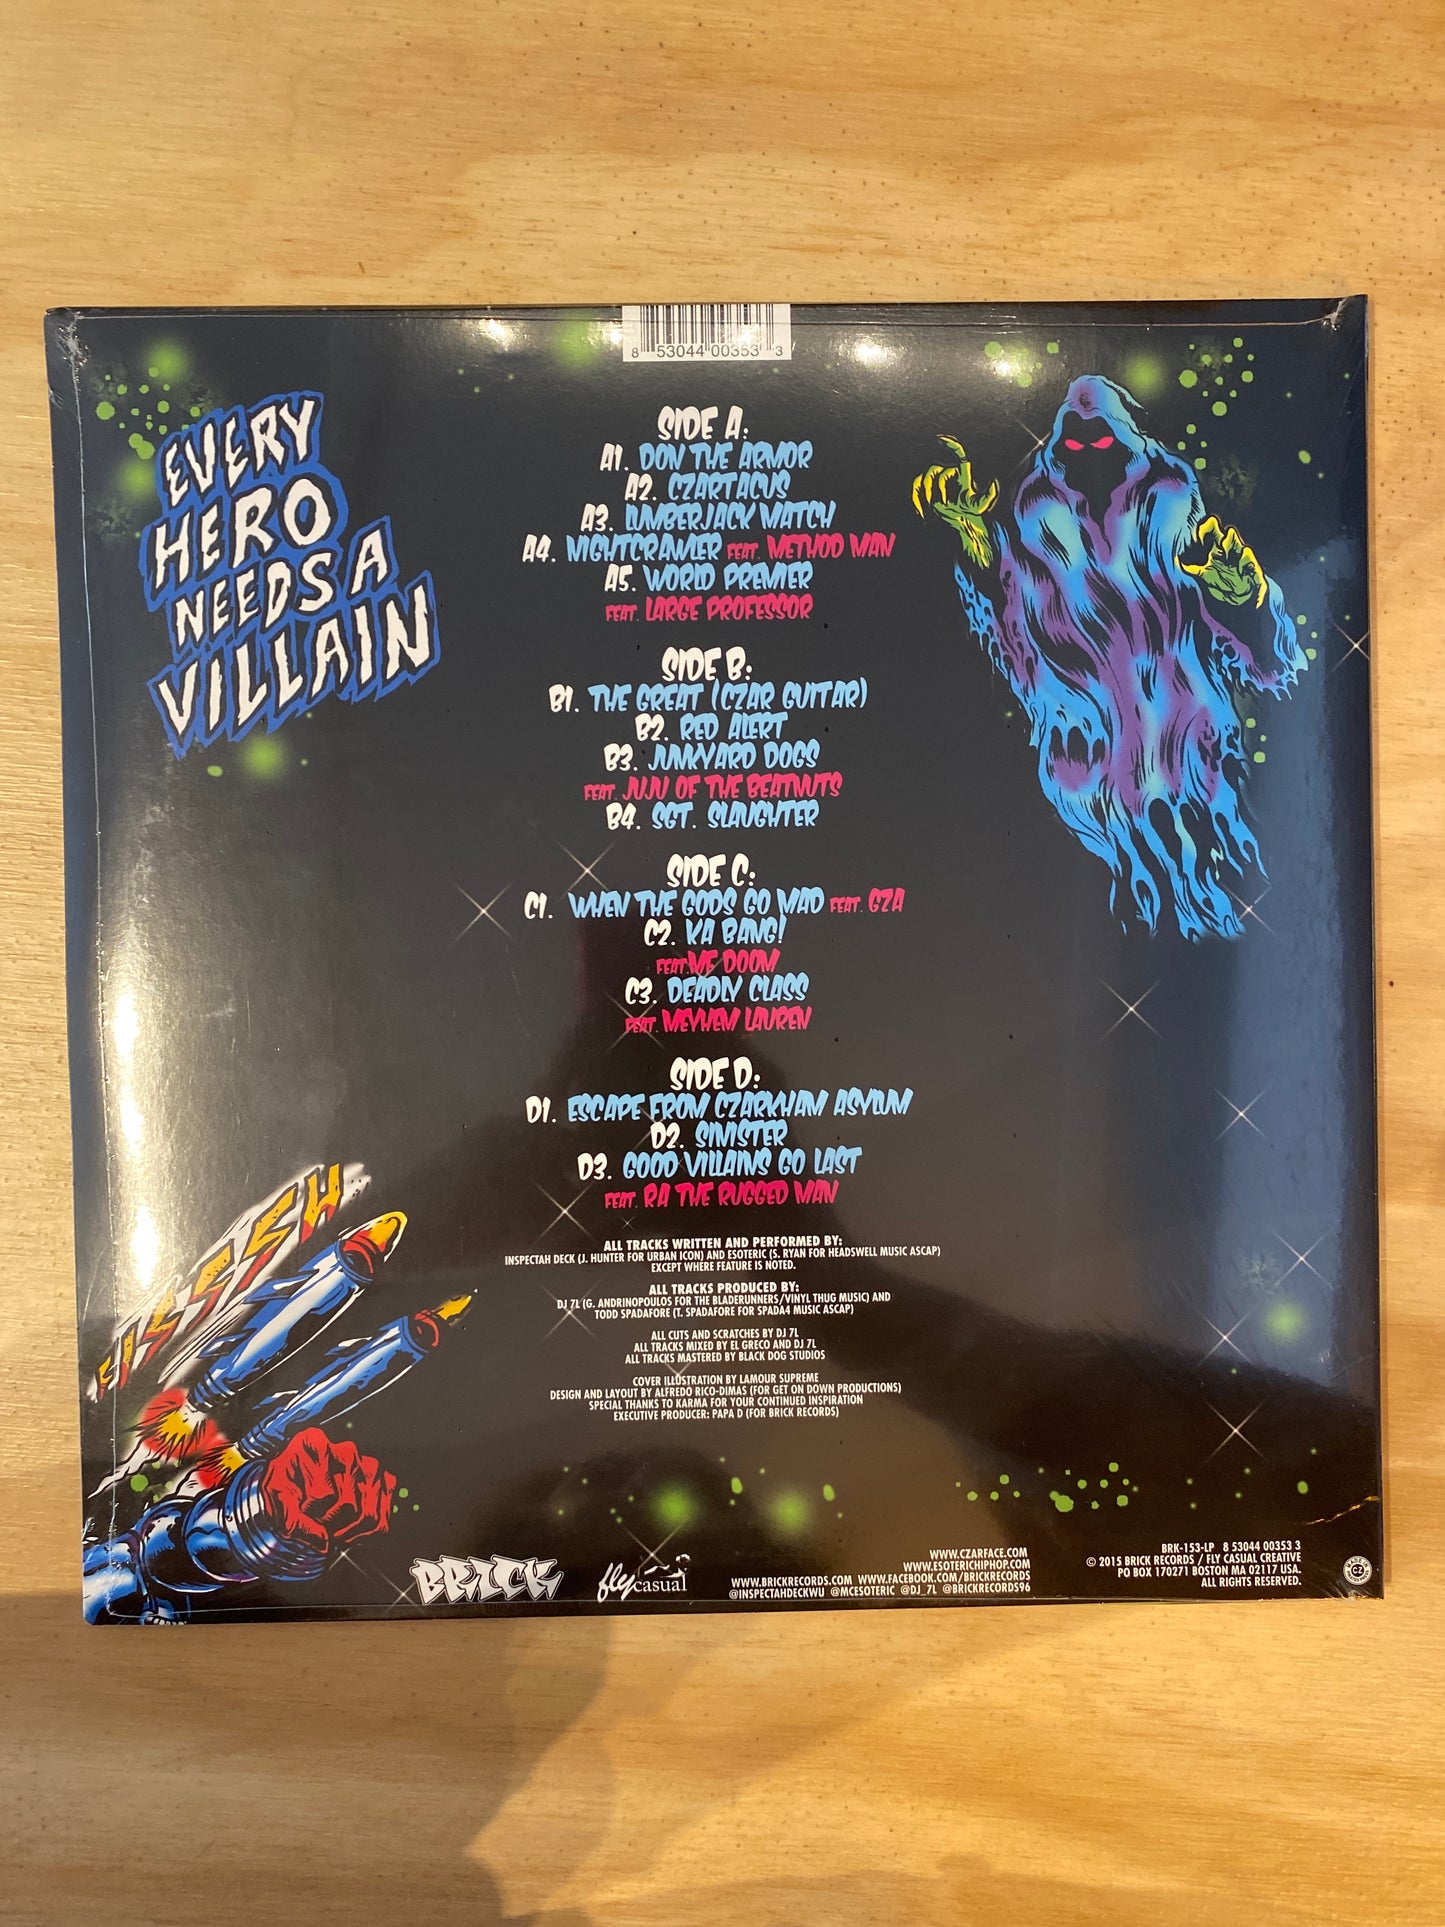 Czarface - Every Hero Needs a Villian - Vinyl LP